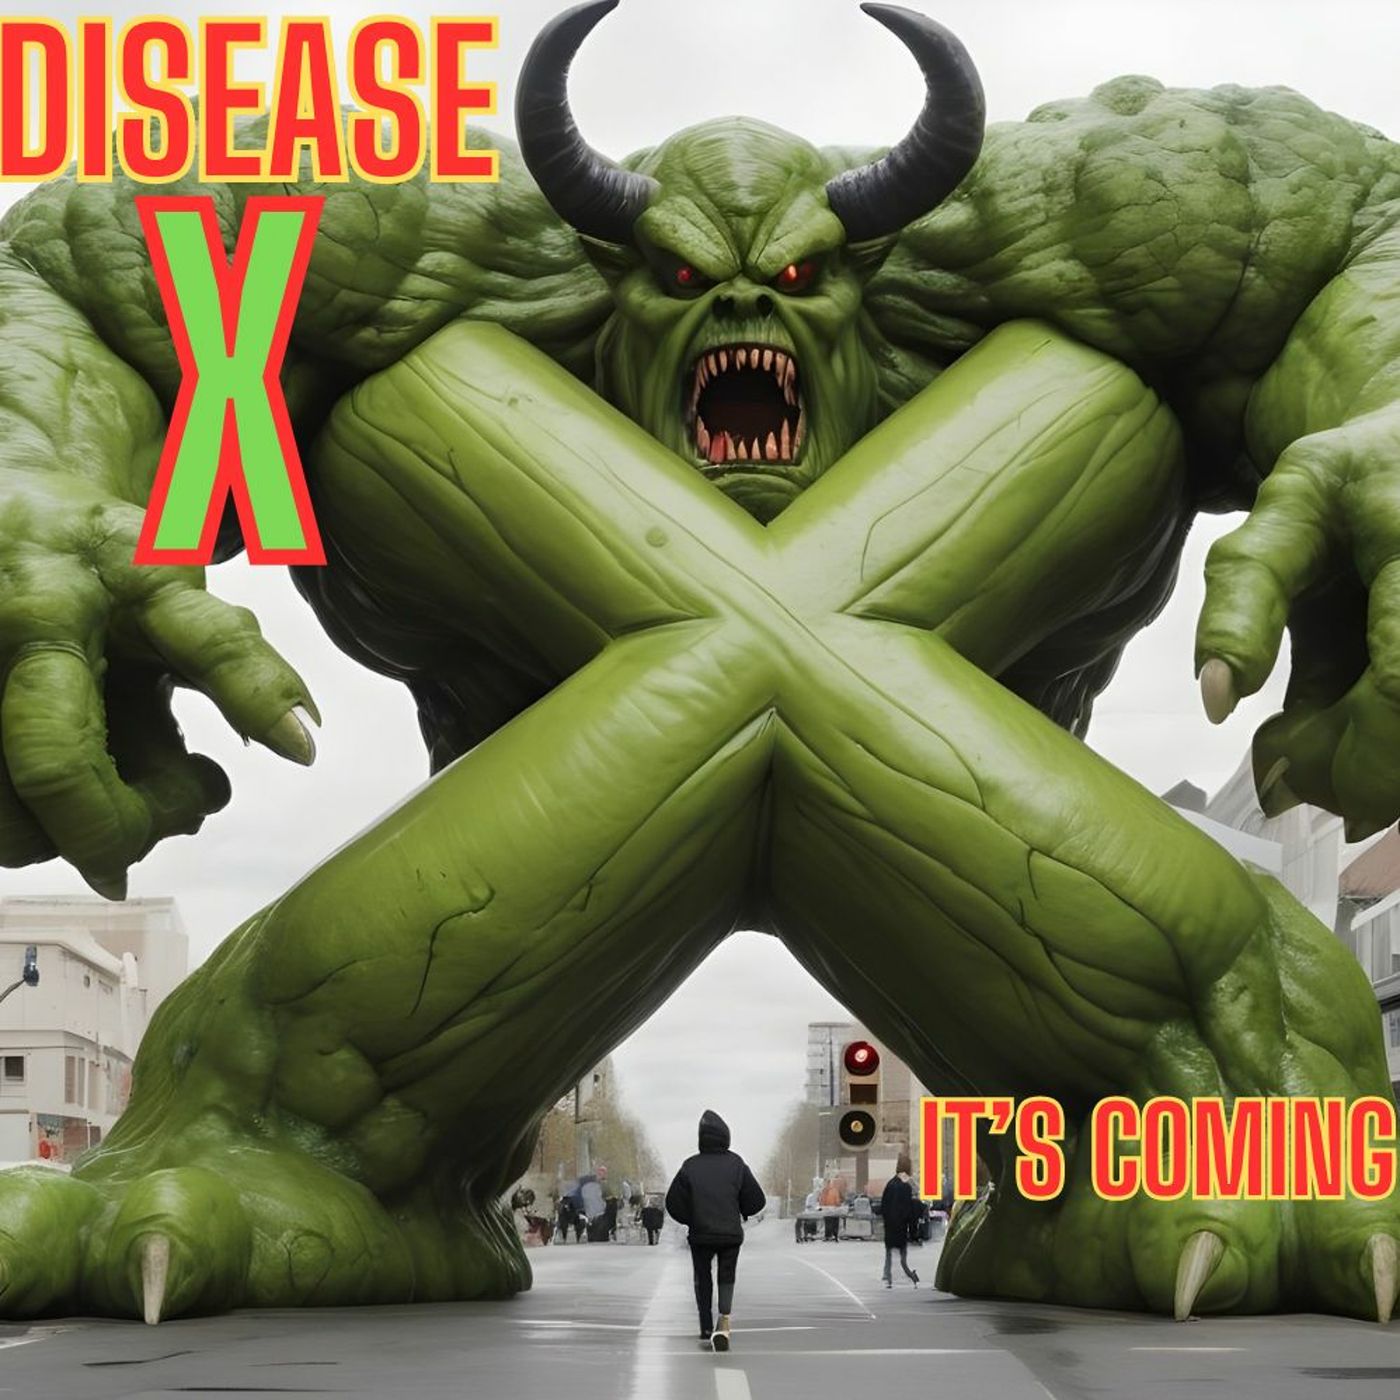 Disease X - It's Not IF, But WHEN!